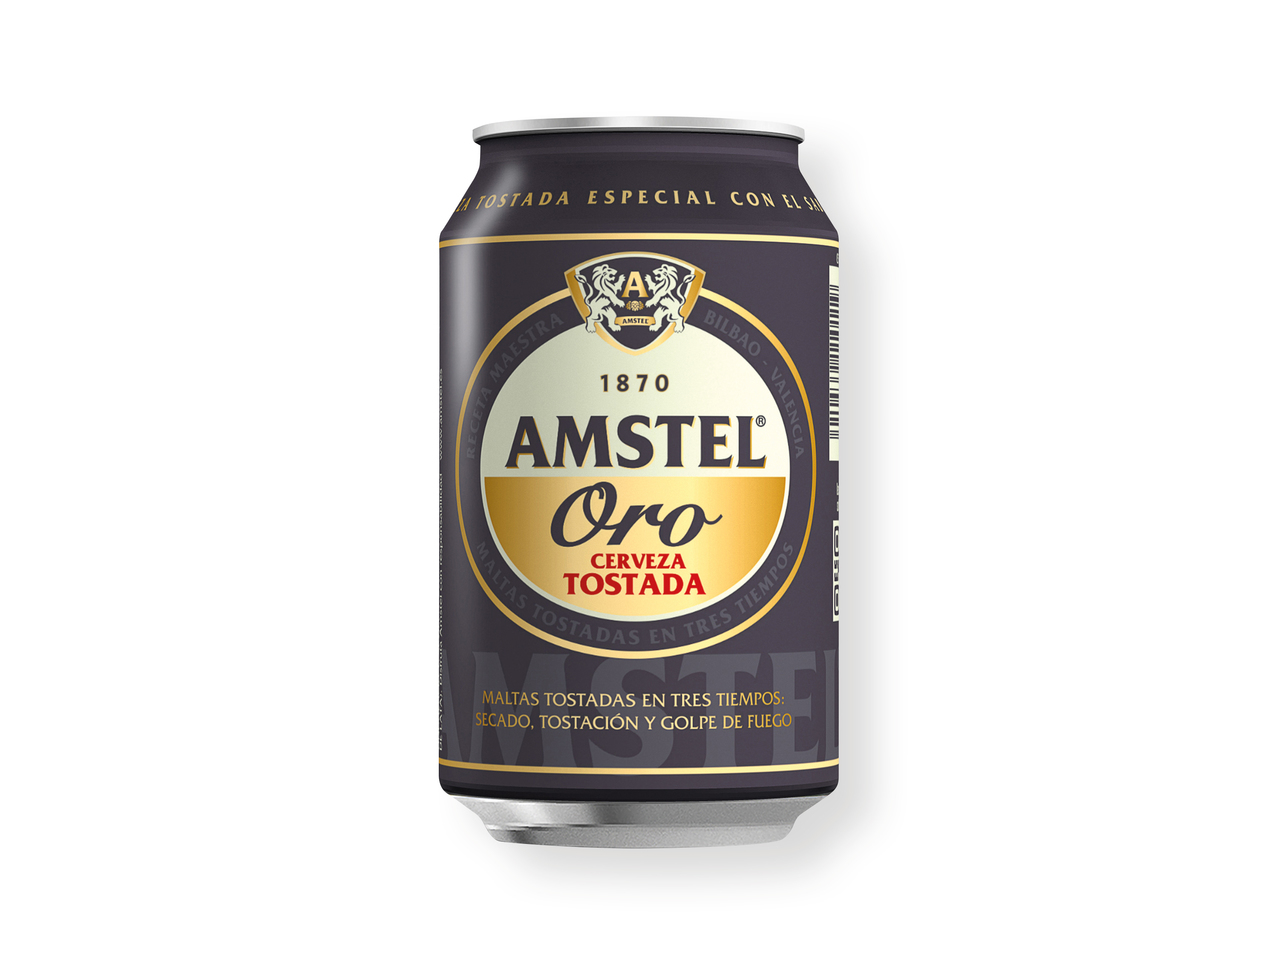 'Amstel(R)' Cerveza tostada Oro